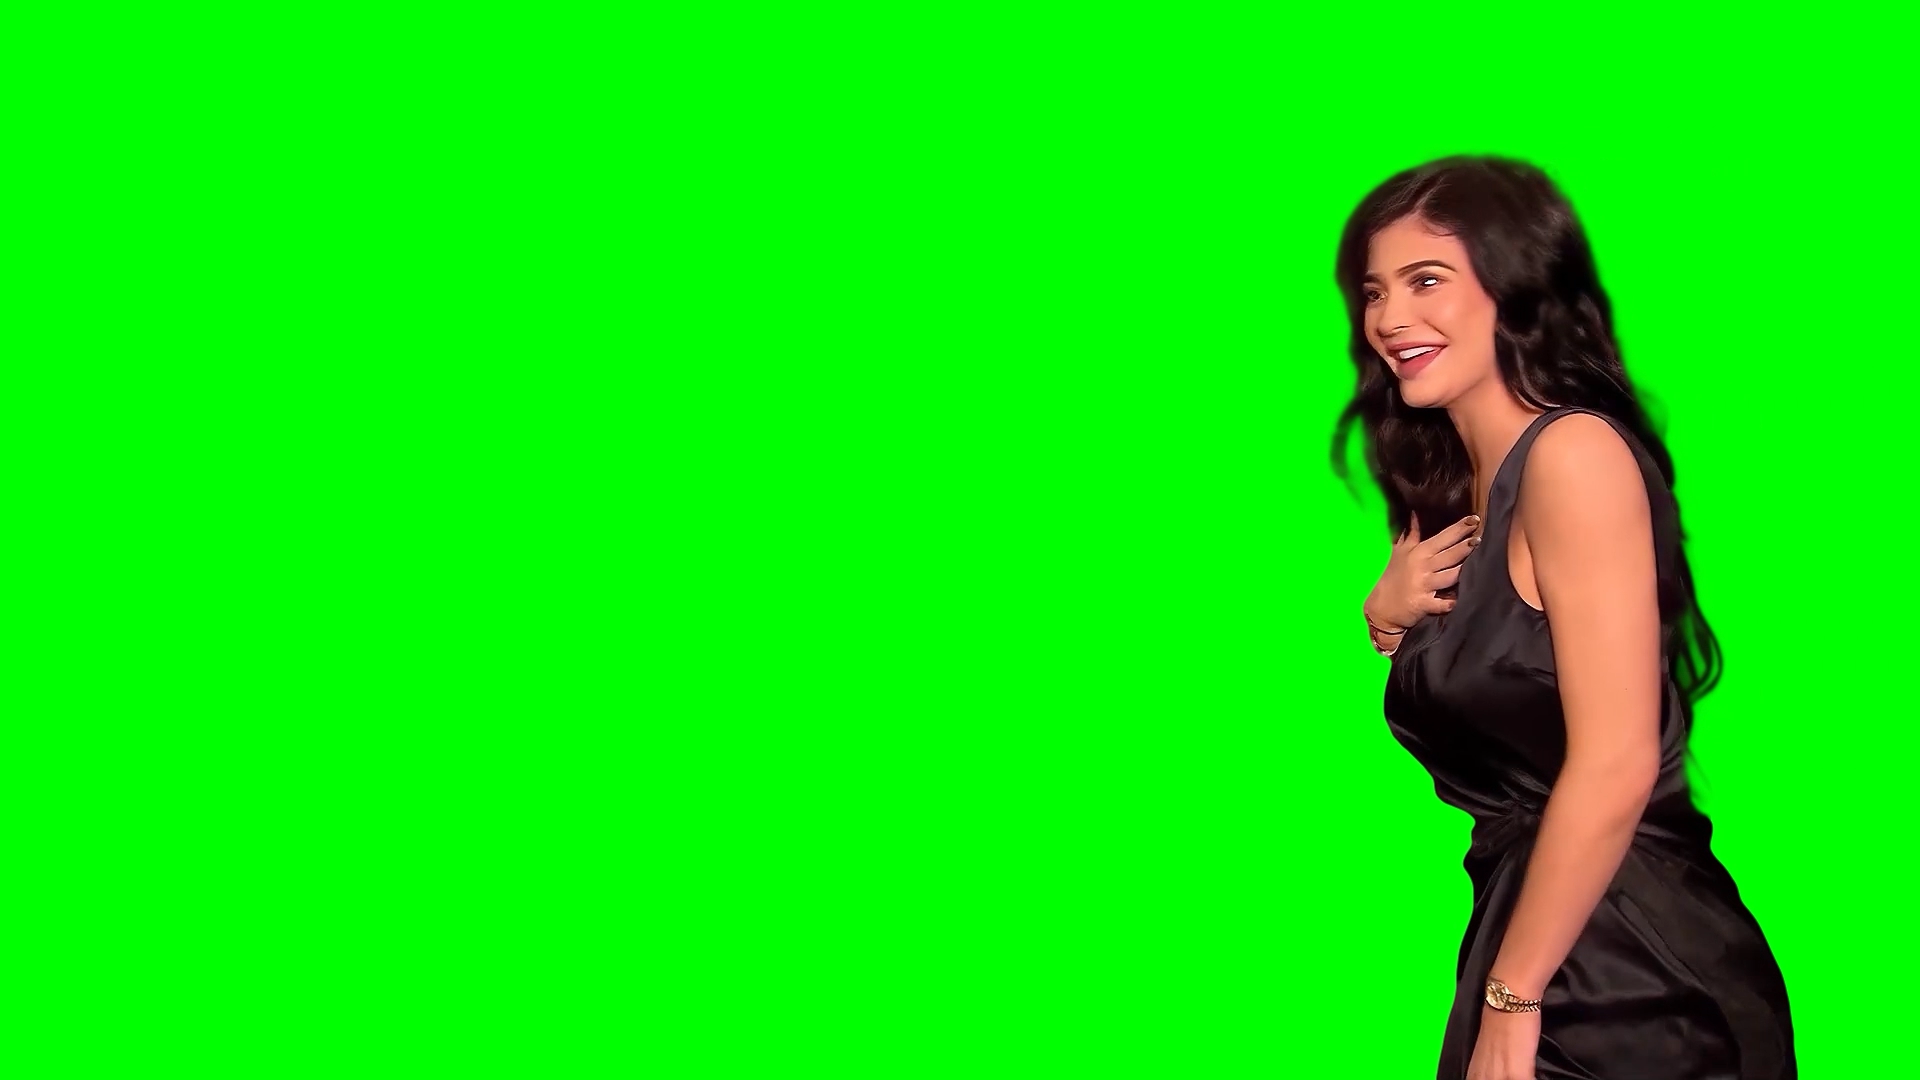 Kylie Jenner Wax Statue Reveal meme - Madame Tussauds (Green Screen)